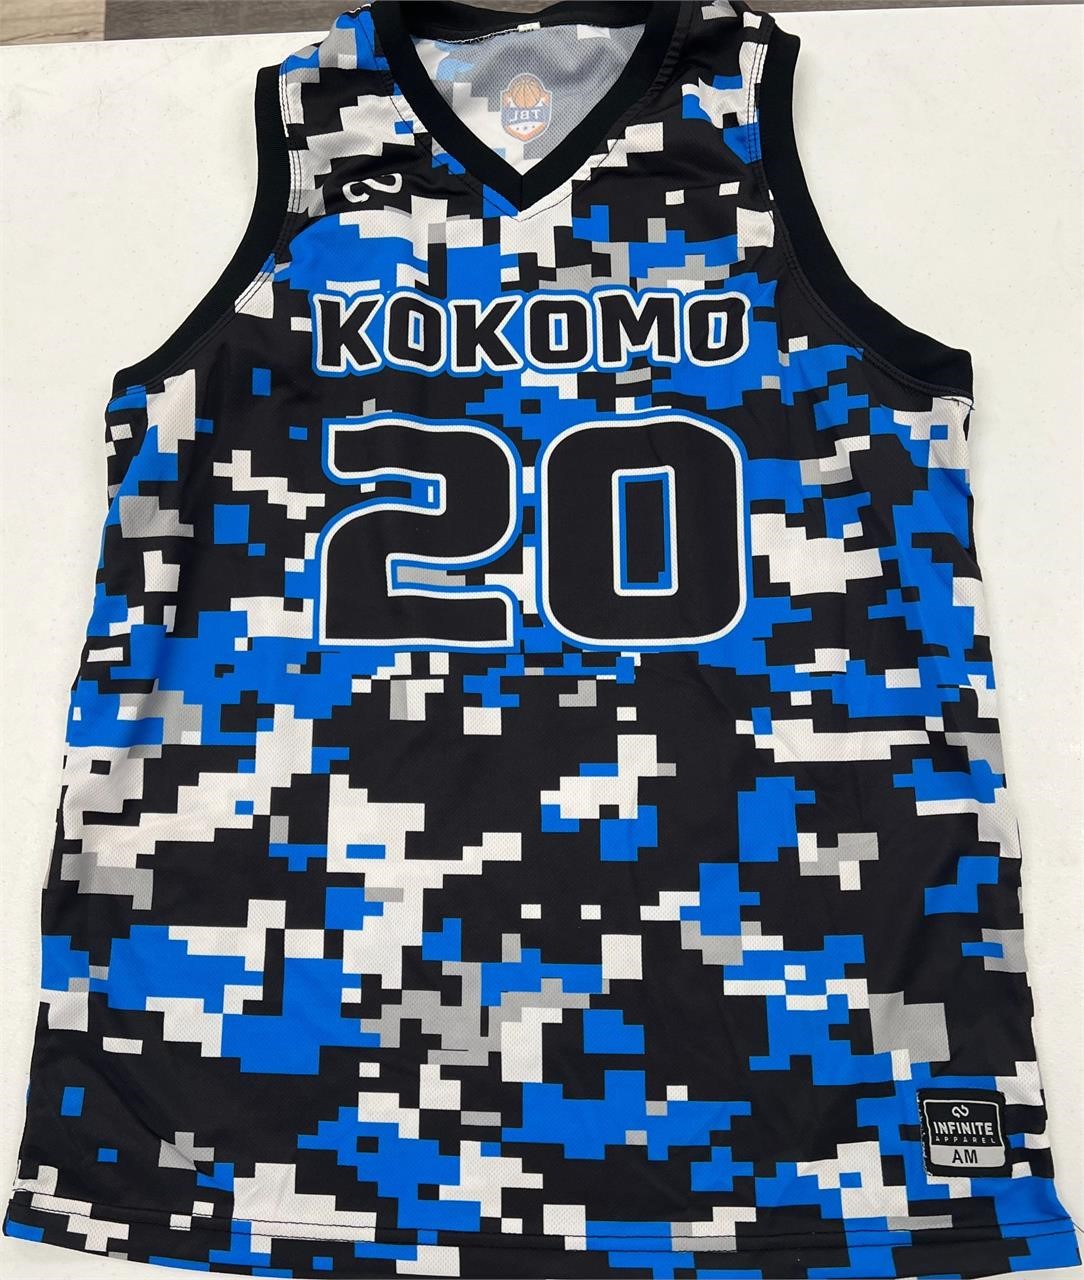 Kokomo Bobkats Military Jersey Auction